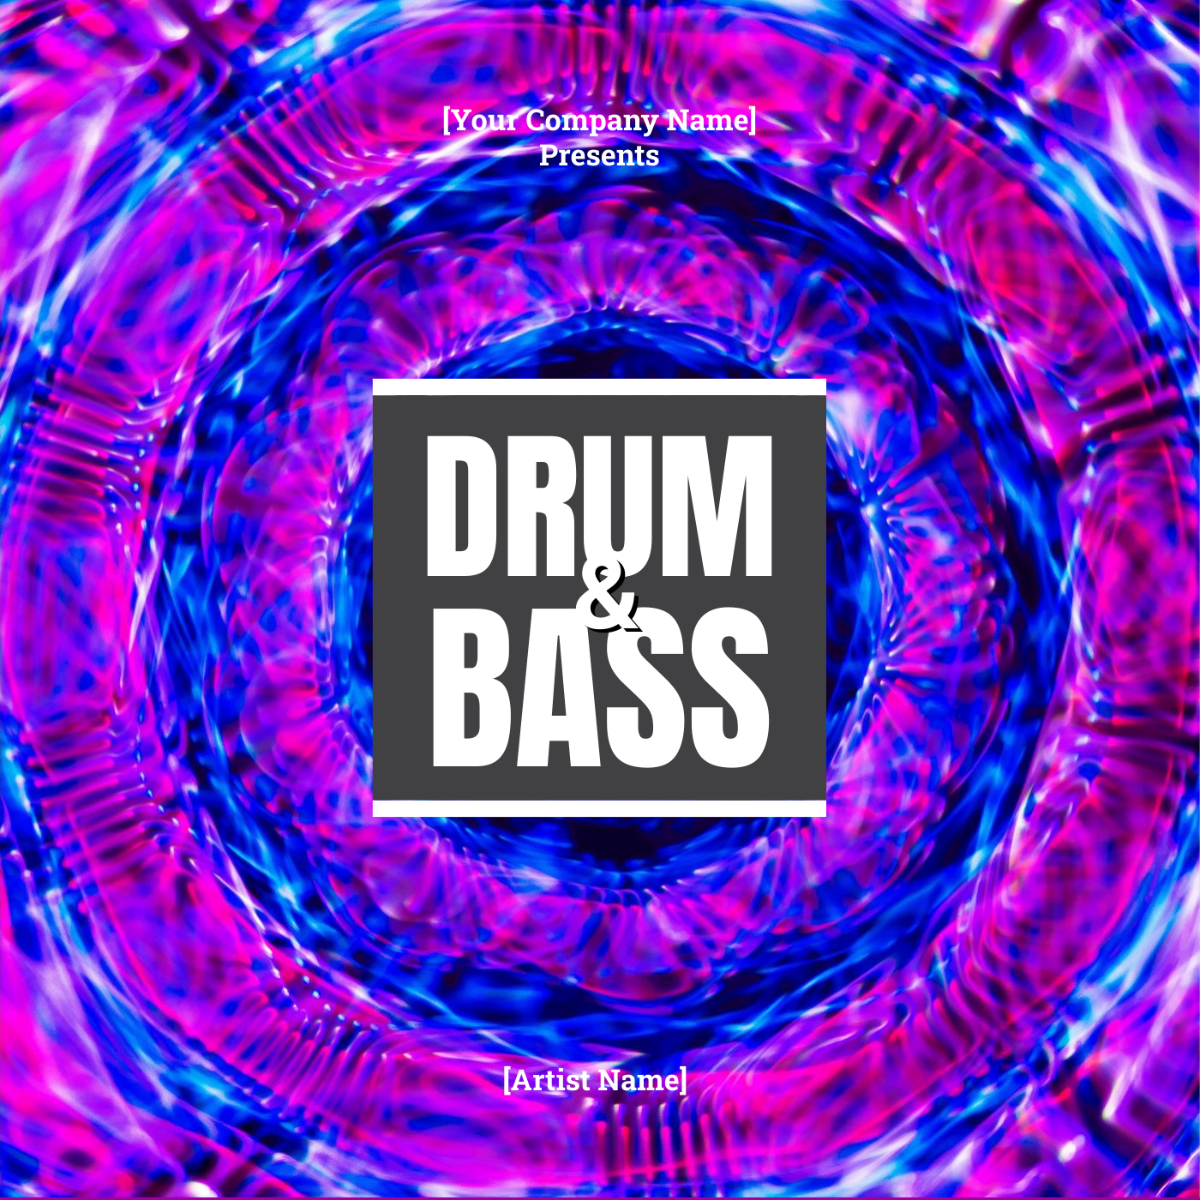 Drum And Bass Album Cover